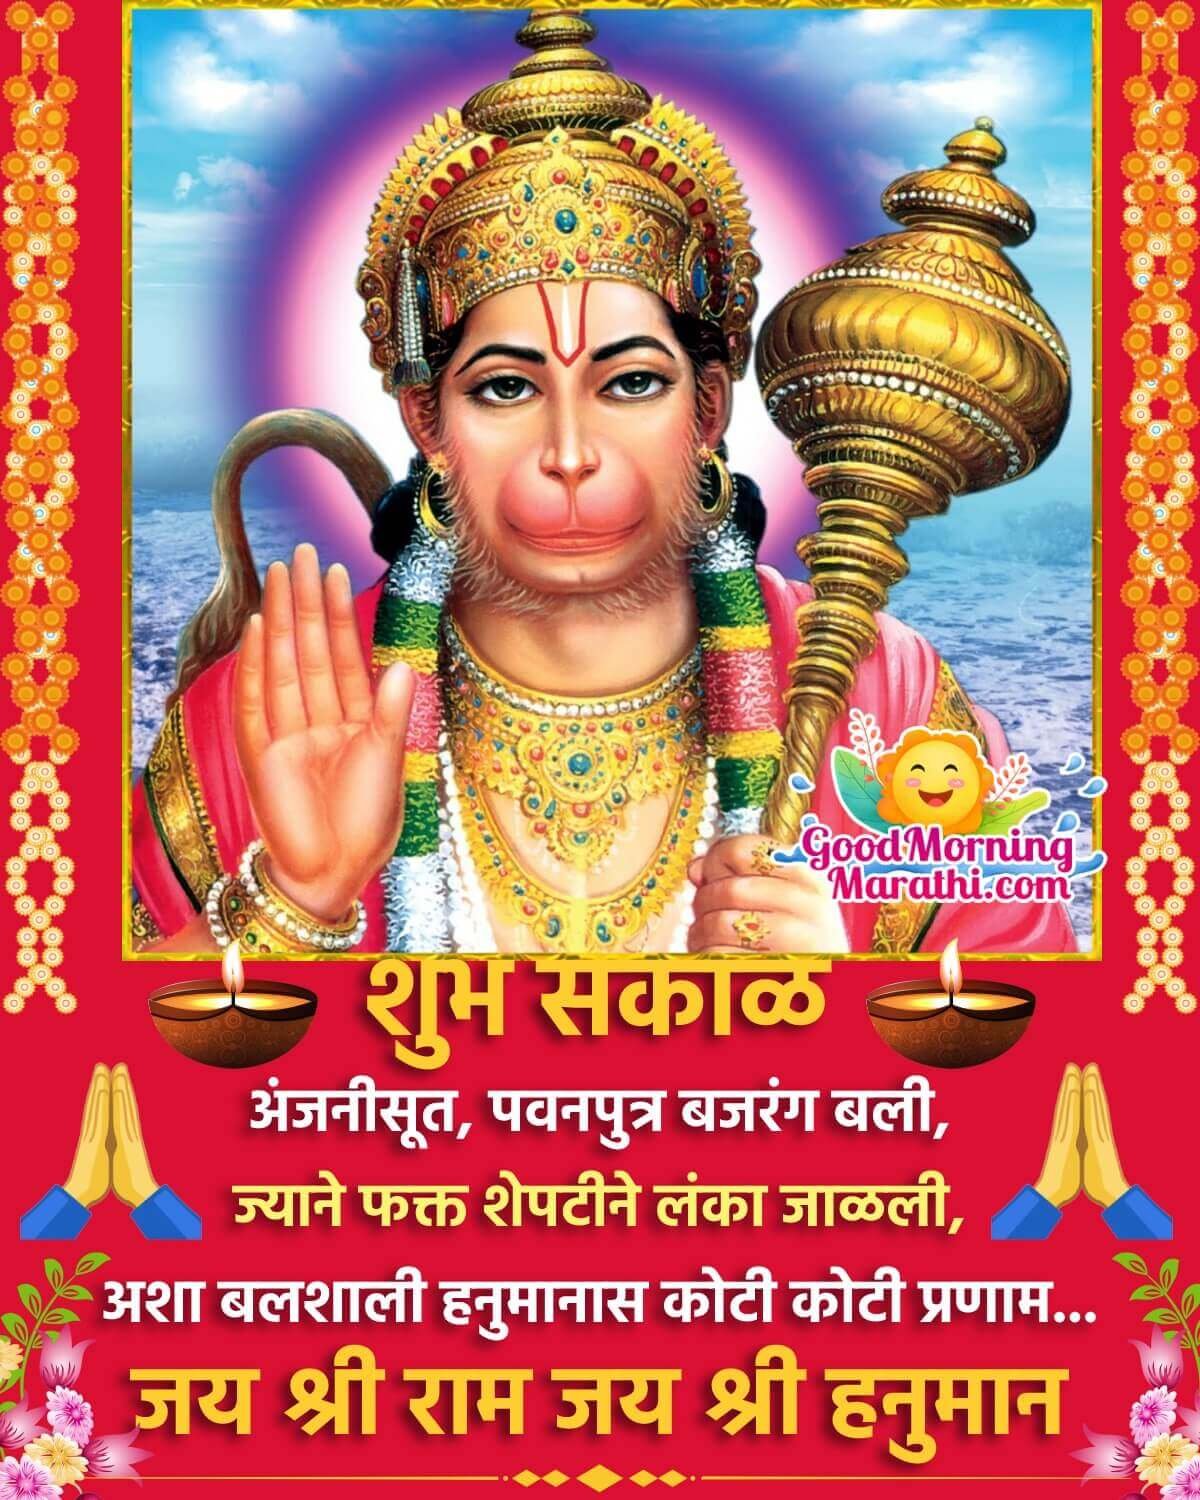 Good Morning Hanuman Images In Marathi